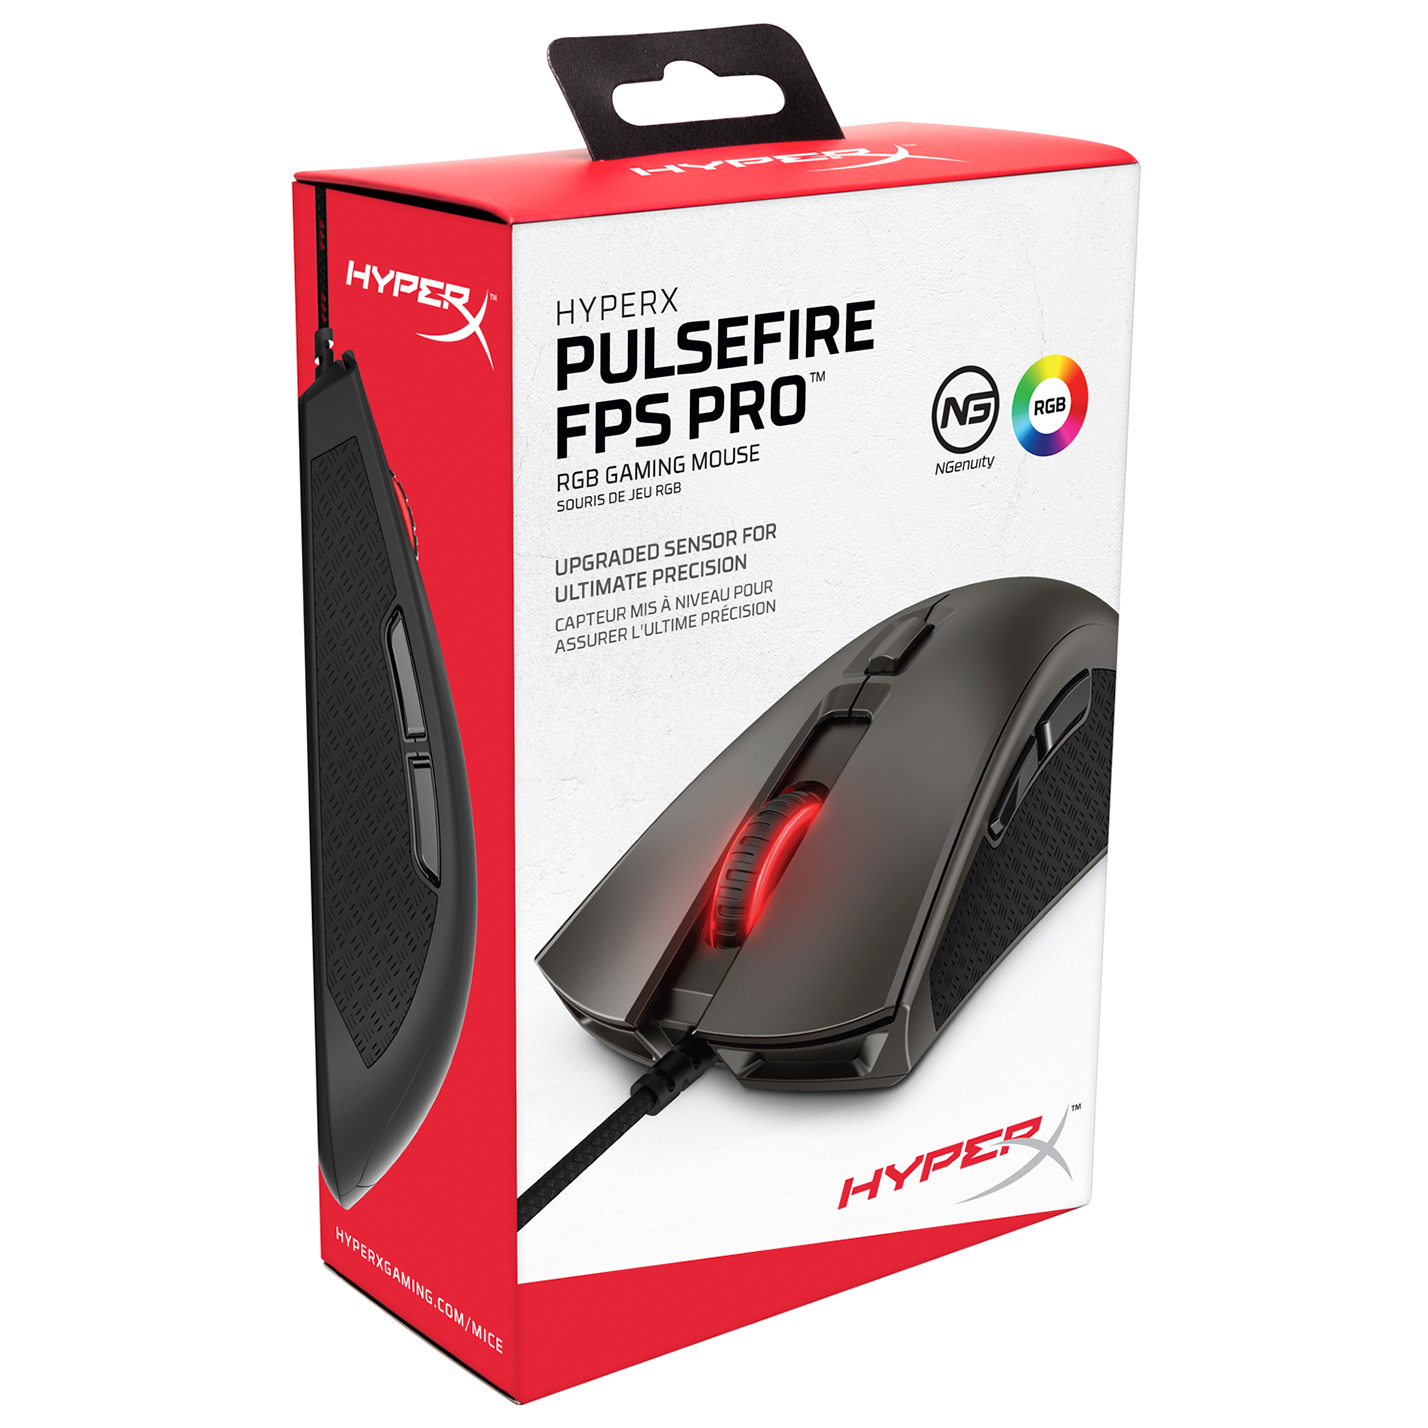 Pro Pulsefire HYPERX FPS Mehrfarbig Schwarz/Leuchtfarbe: Maus, Gaming RGB